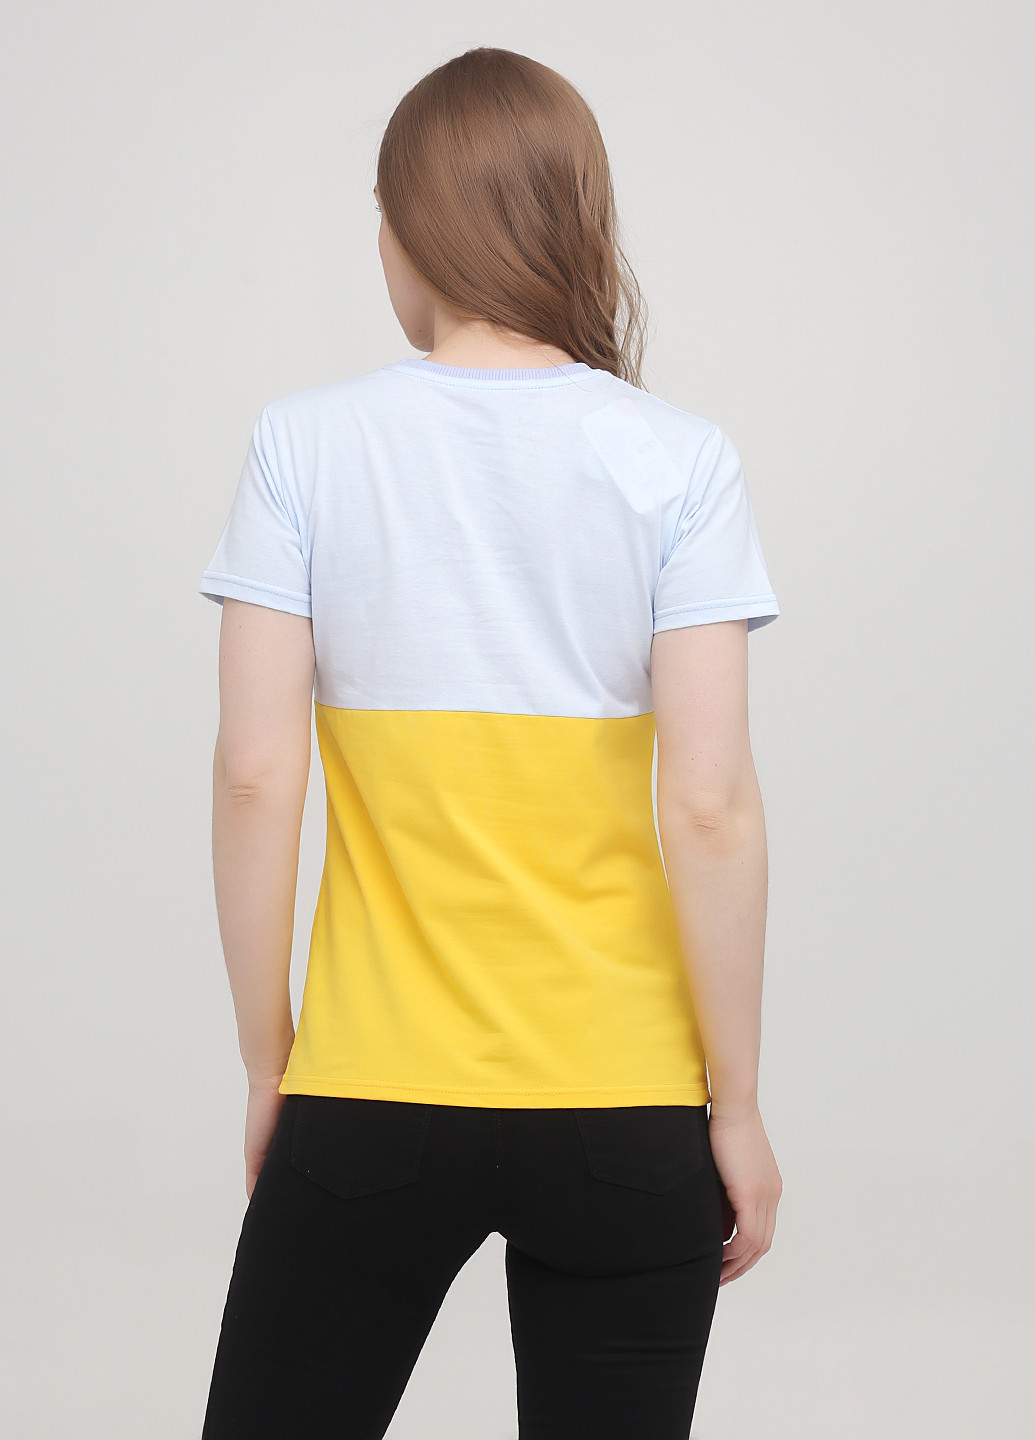 Сине-желтая летняя футболка женская 19ж425-24 желто-голубая Malta